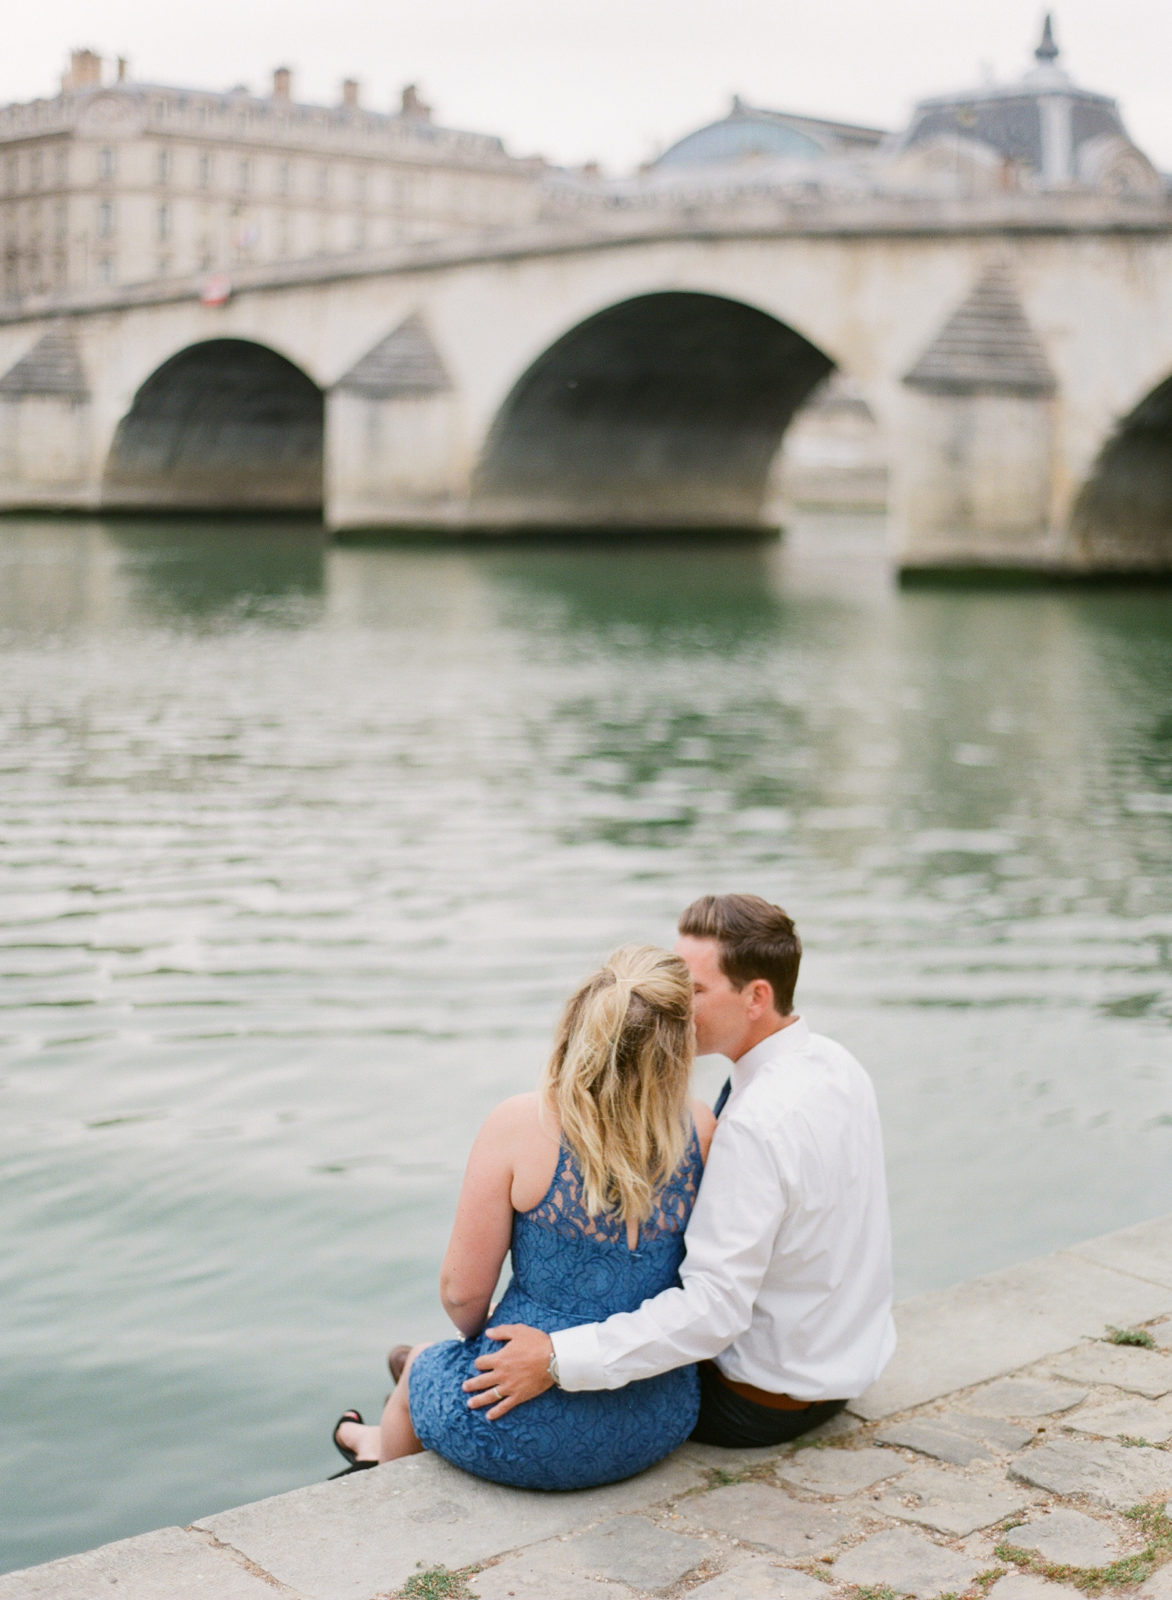 Best Engagement Photos of 2018 | Fine Art Film Photography | Destination Wedding Photographer | Molly Carr Photography | Engagement Session | Pre-Wedding Photos | Couple Sitting on the Seine | Paris Engagement Session | France